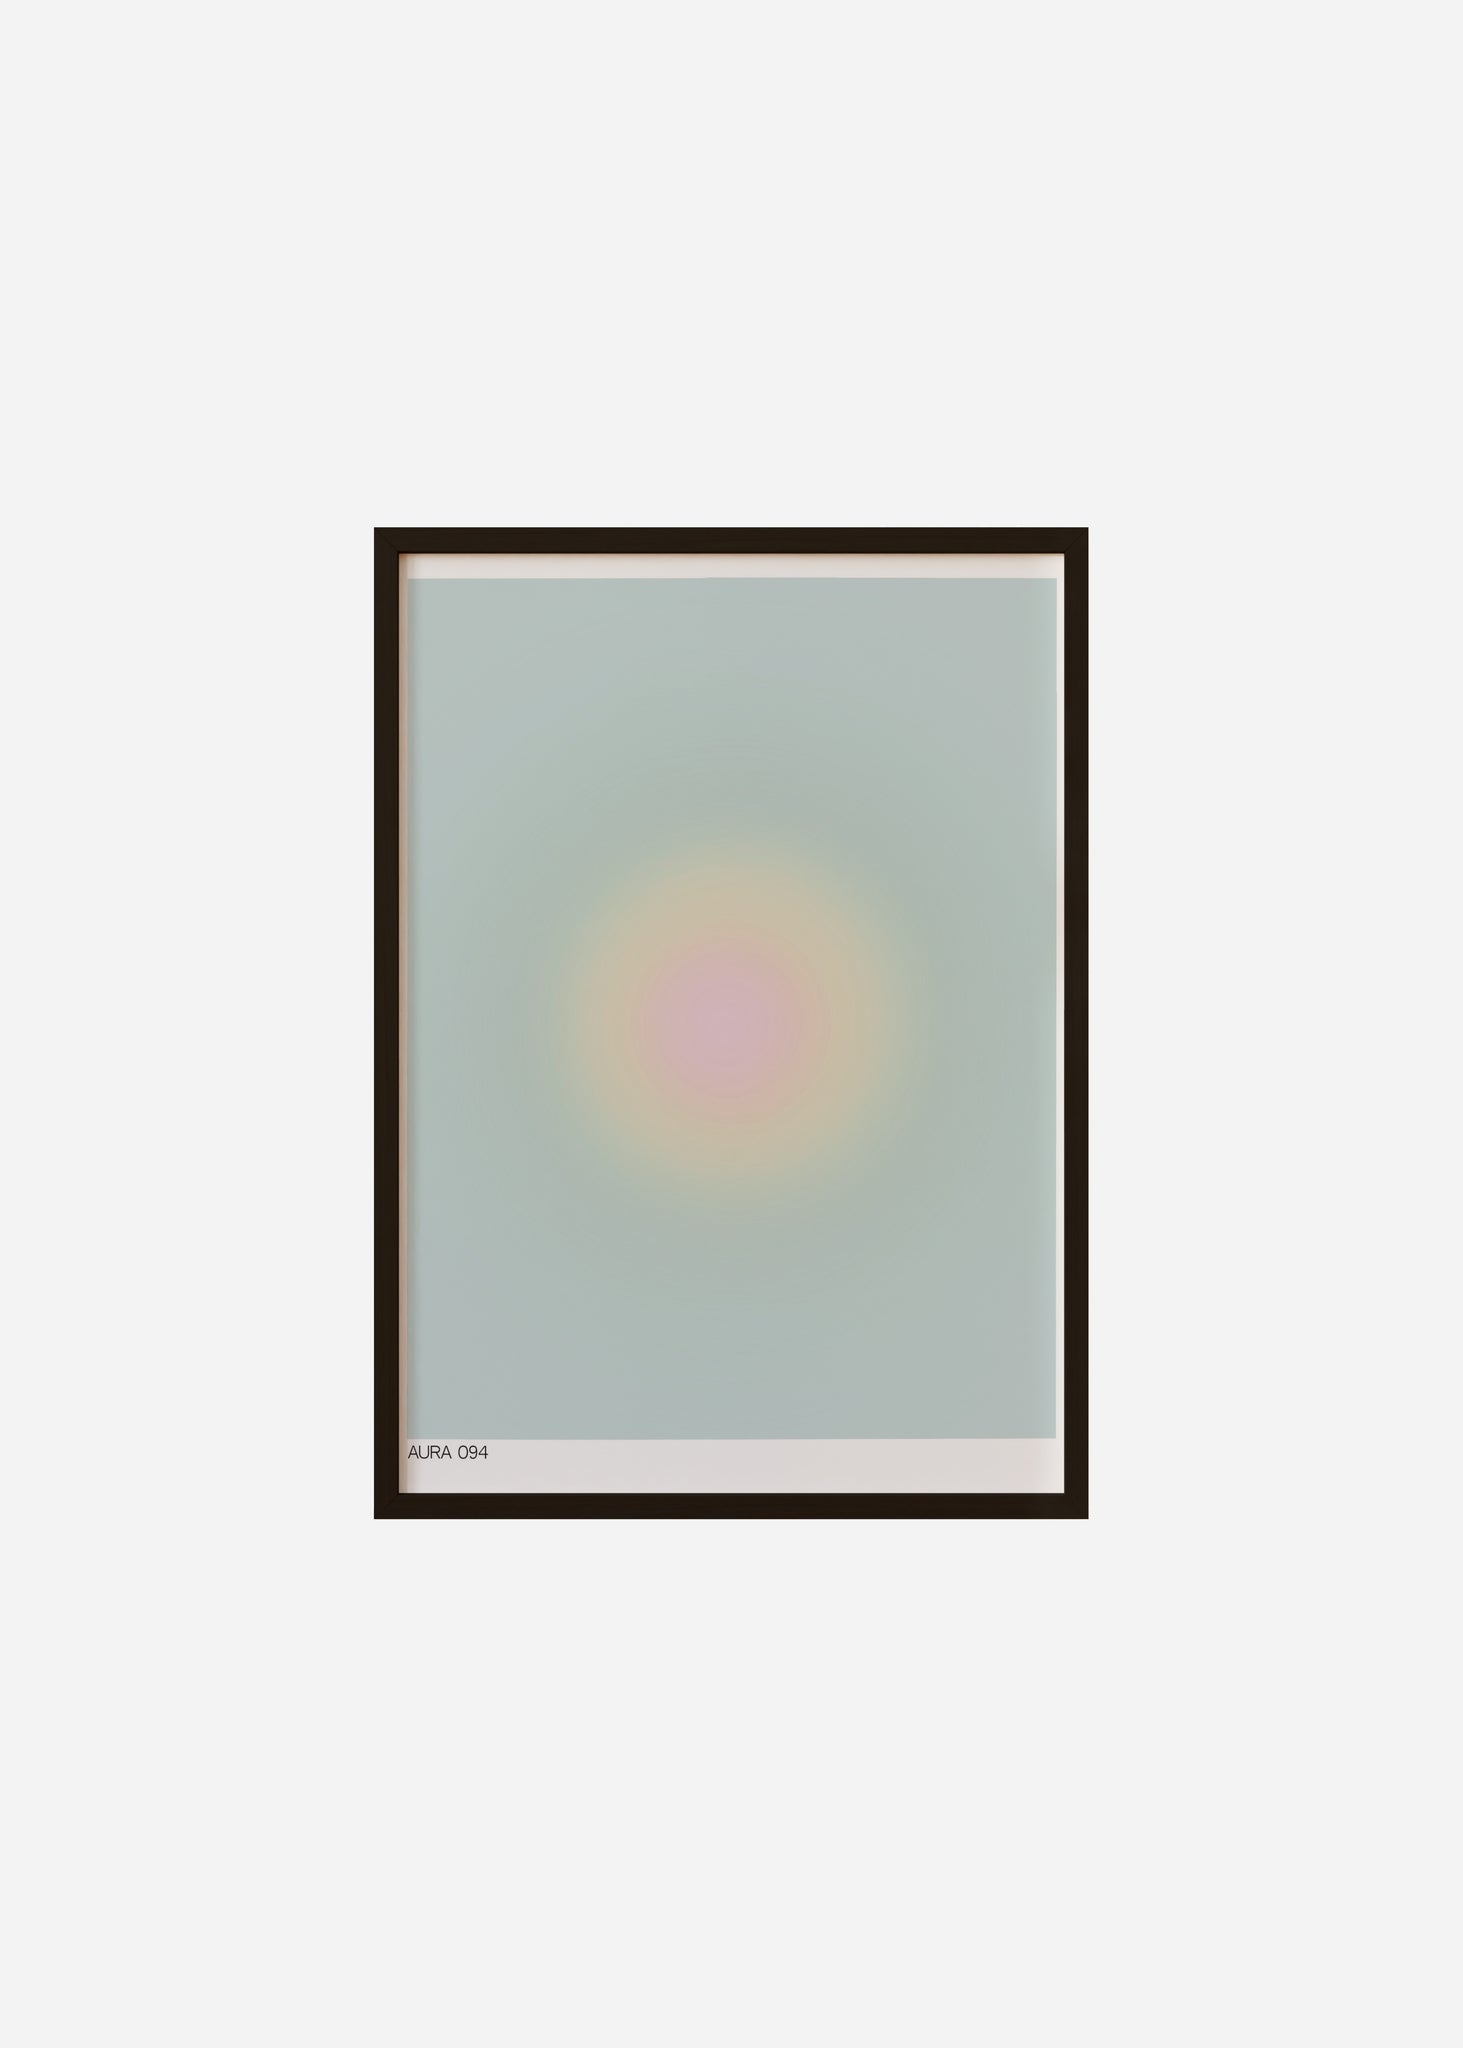 aura 094 Framed Print